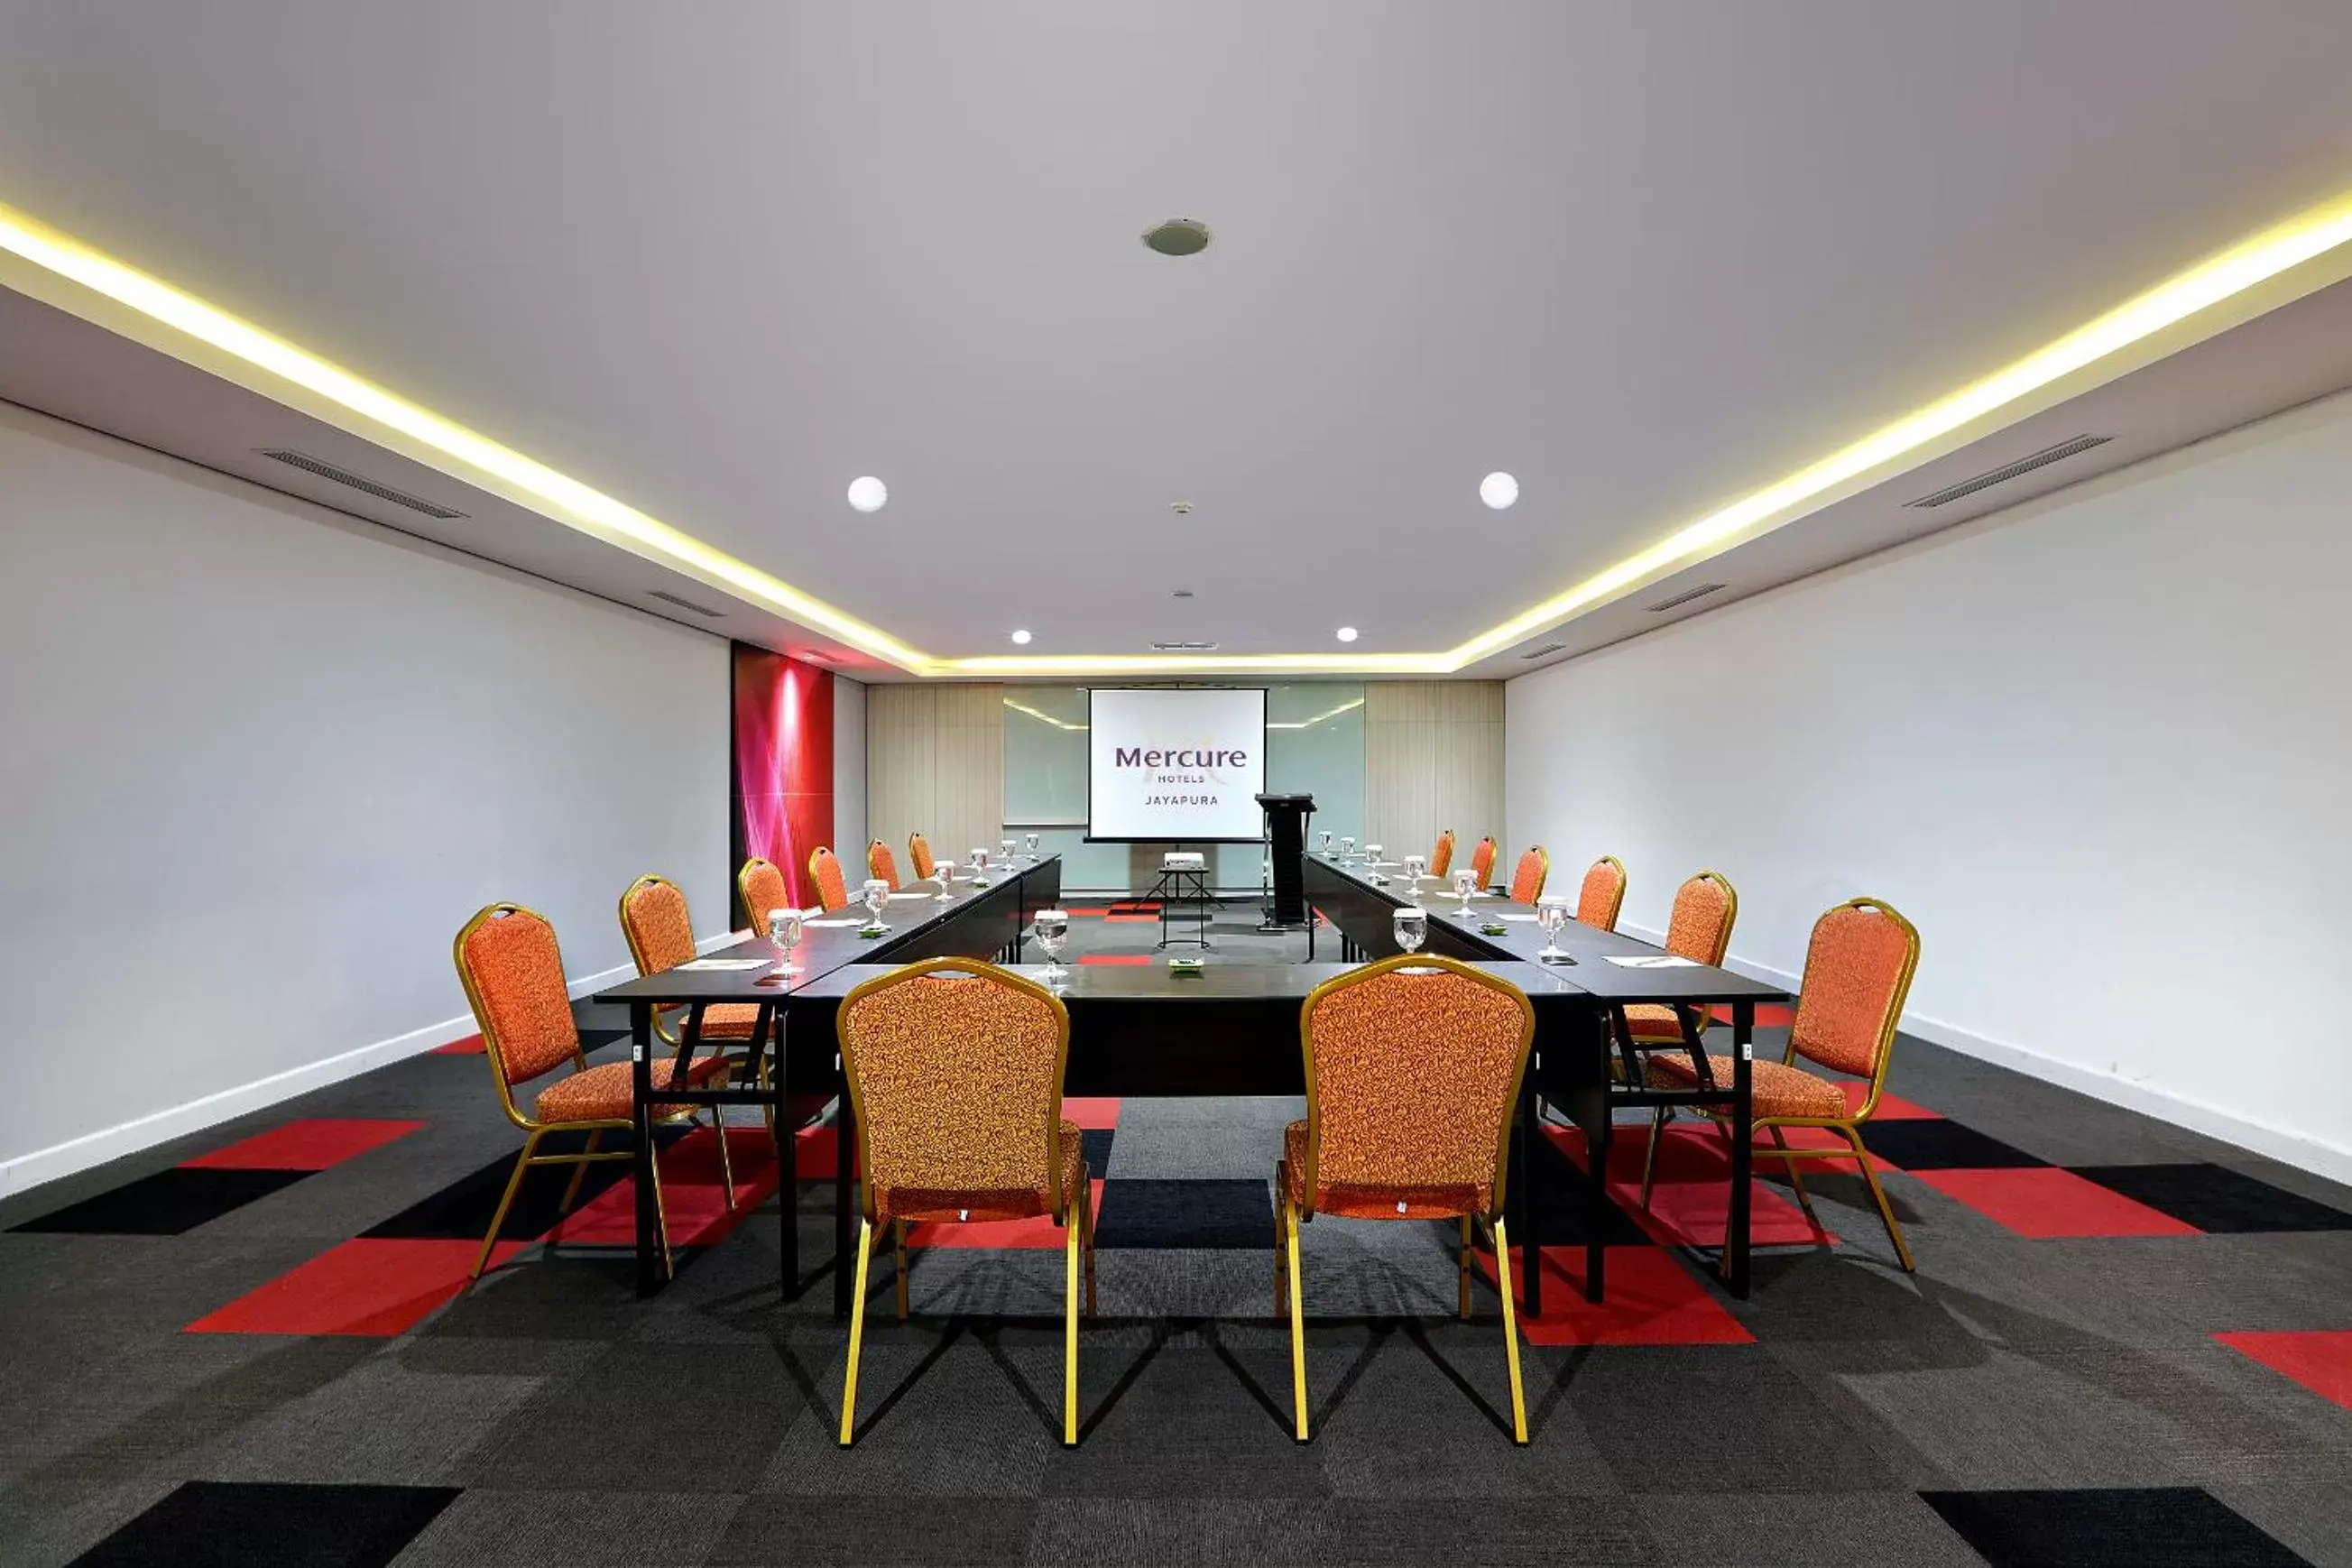 Meeting/conference room in Mercure Jayapura